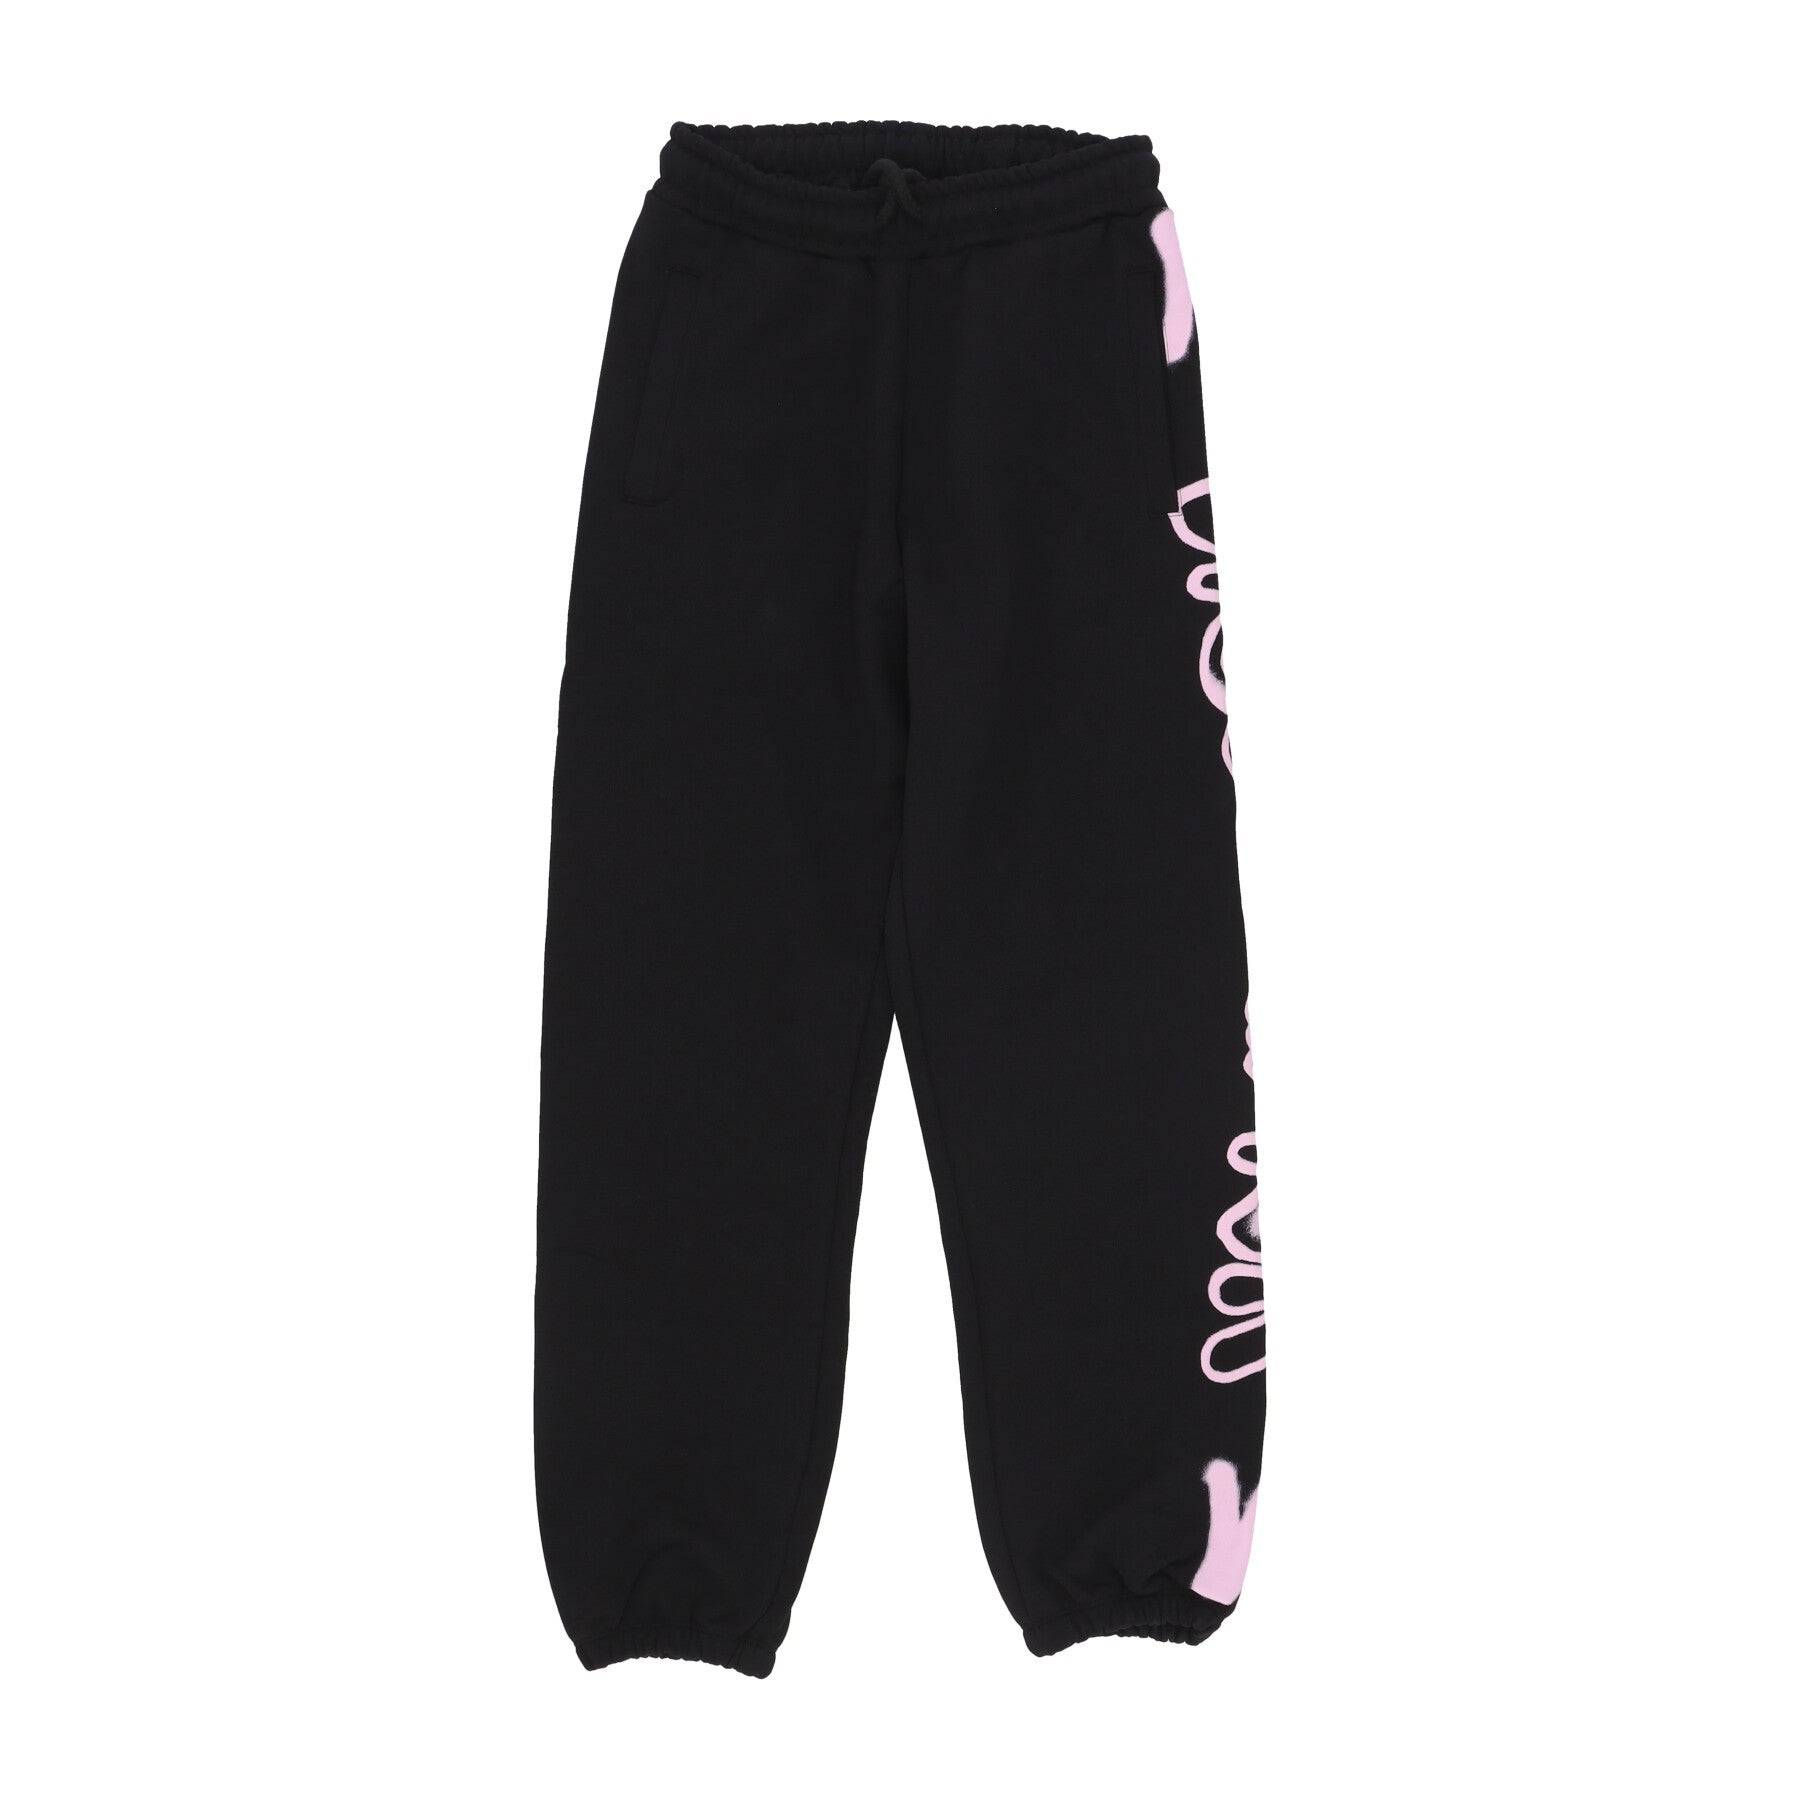 Pantalone Tuta Leggero Donna W Side Big Logo Pant Black/st Pink